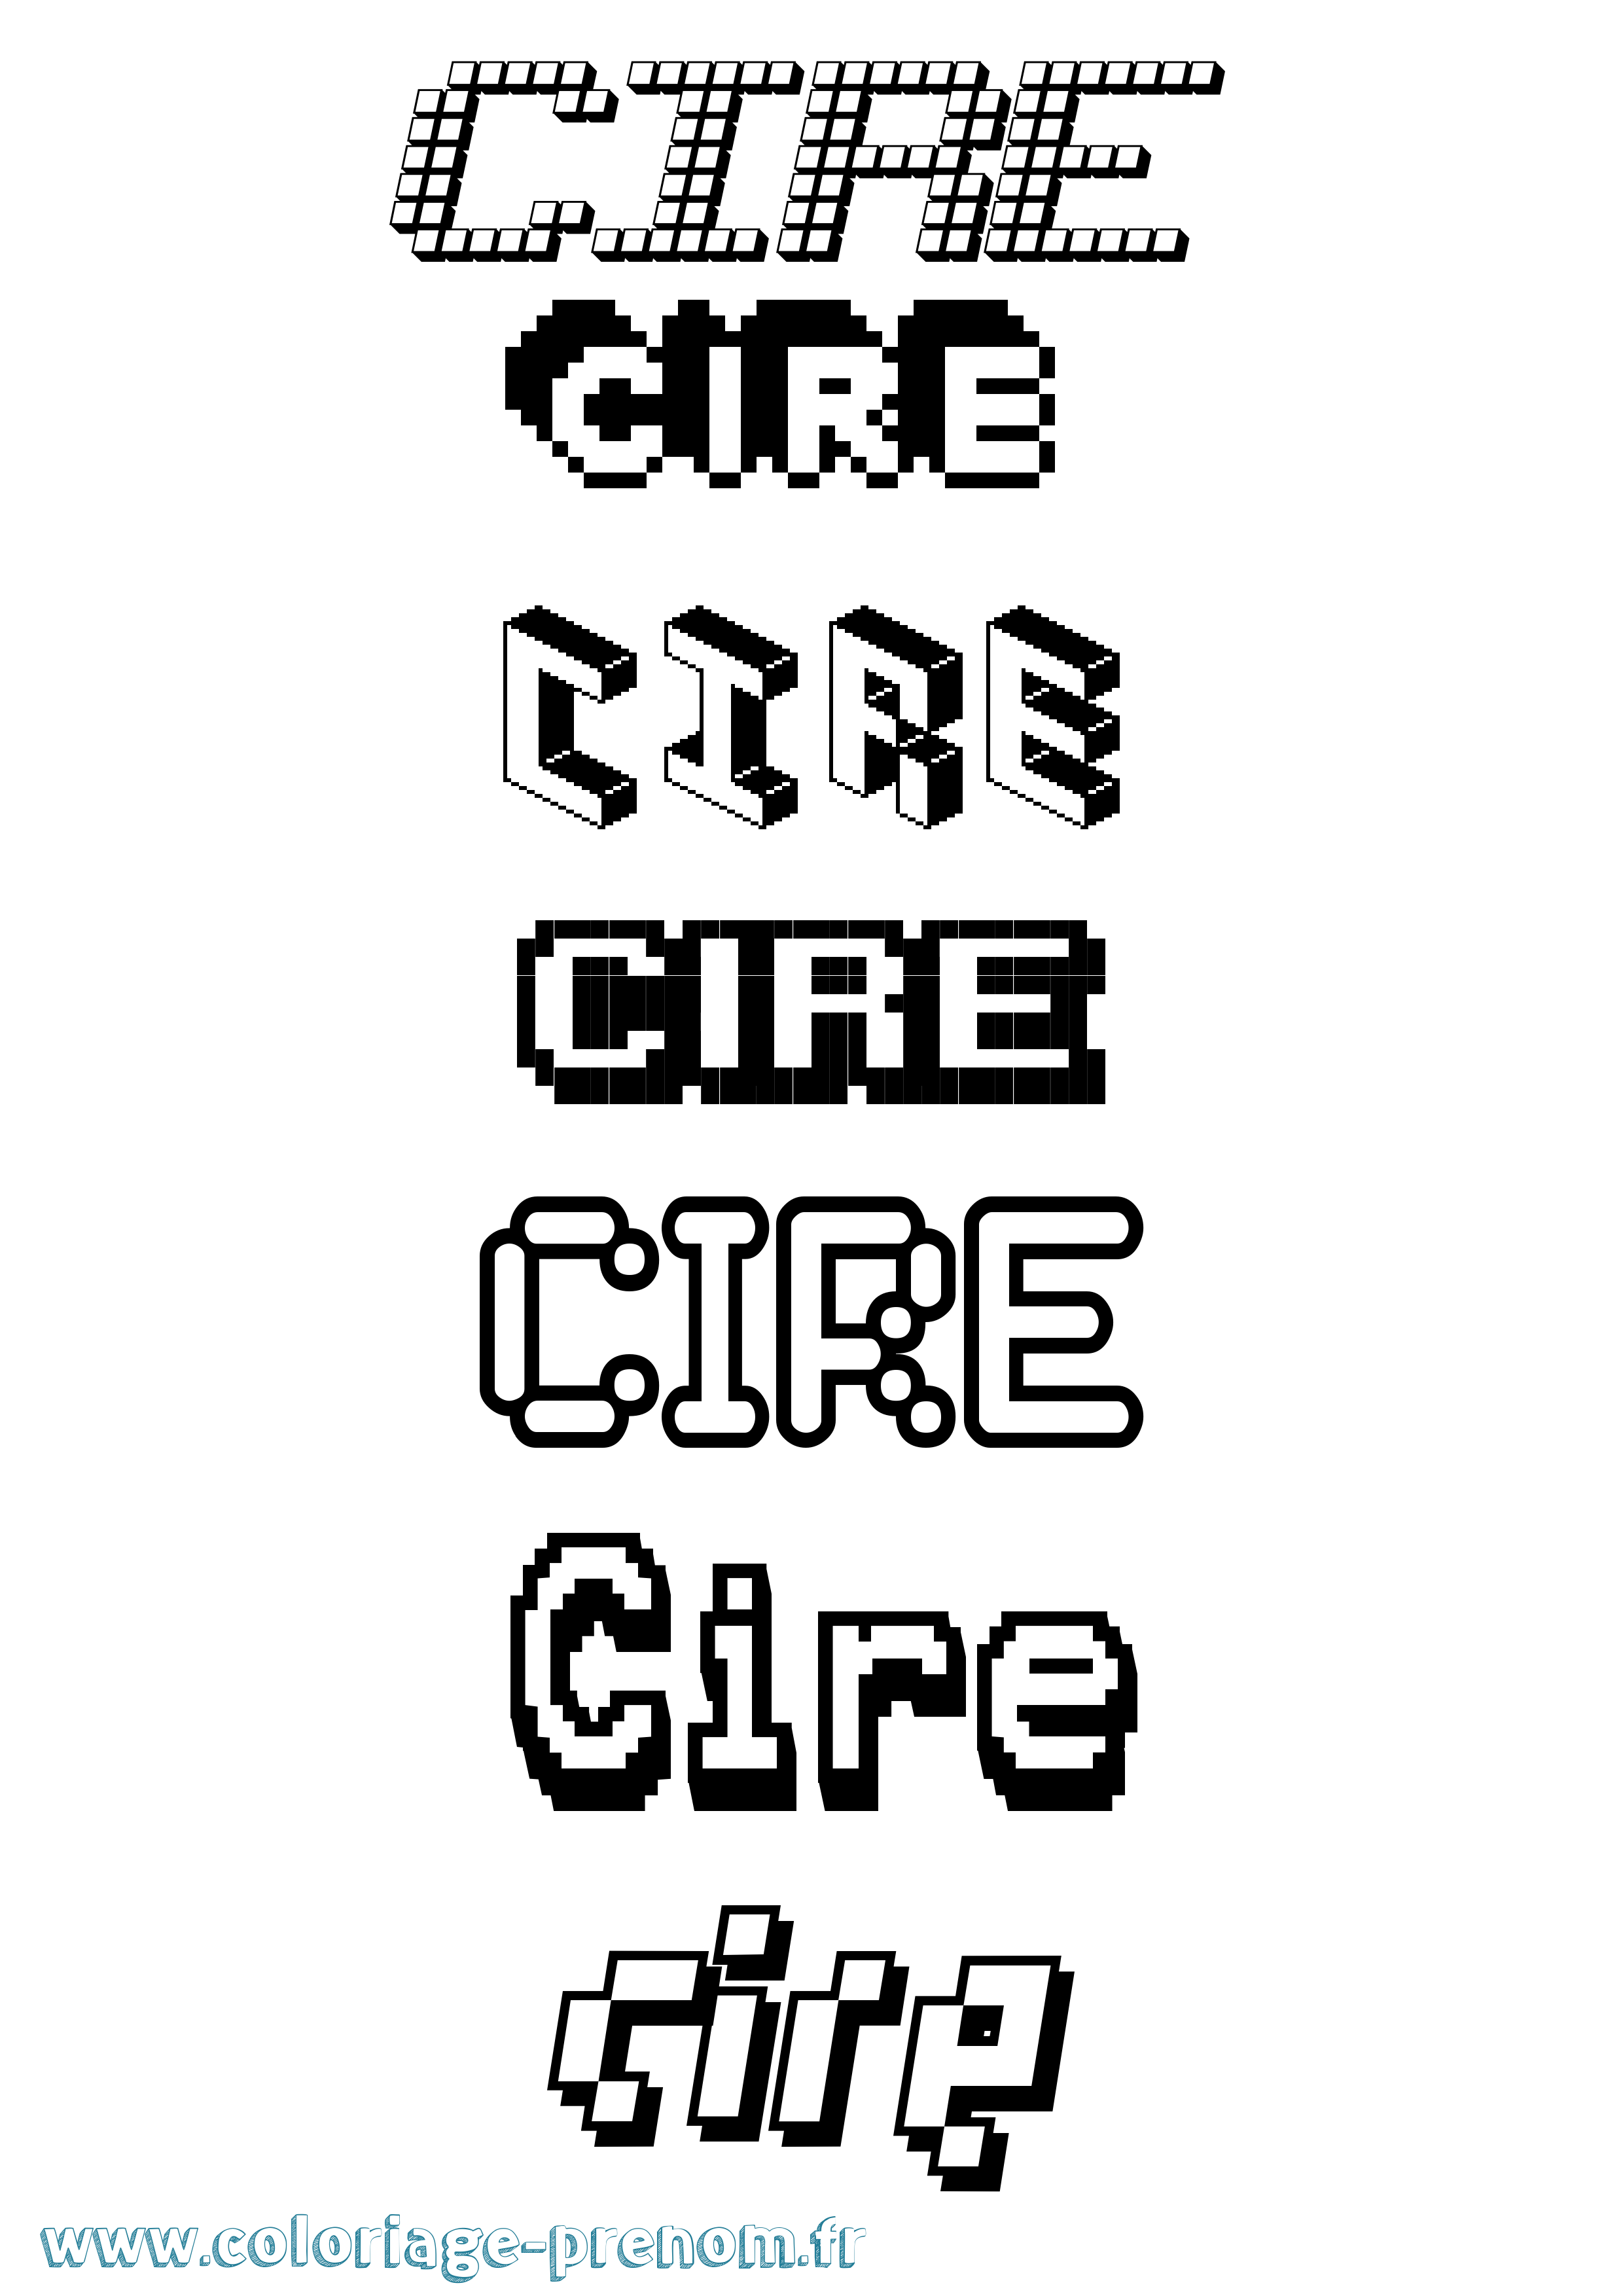 Coloriage prénom Cire Pixel